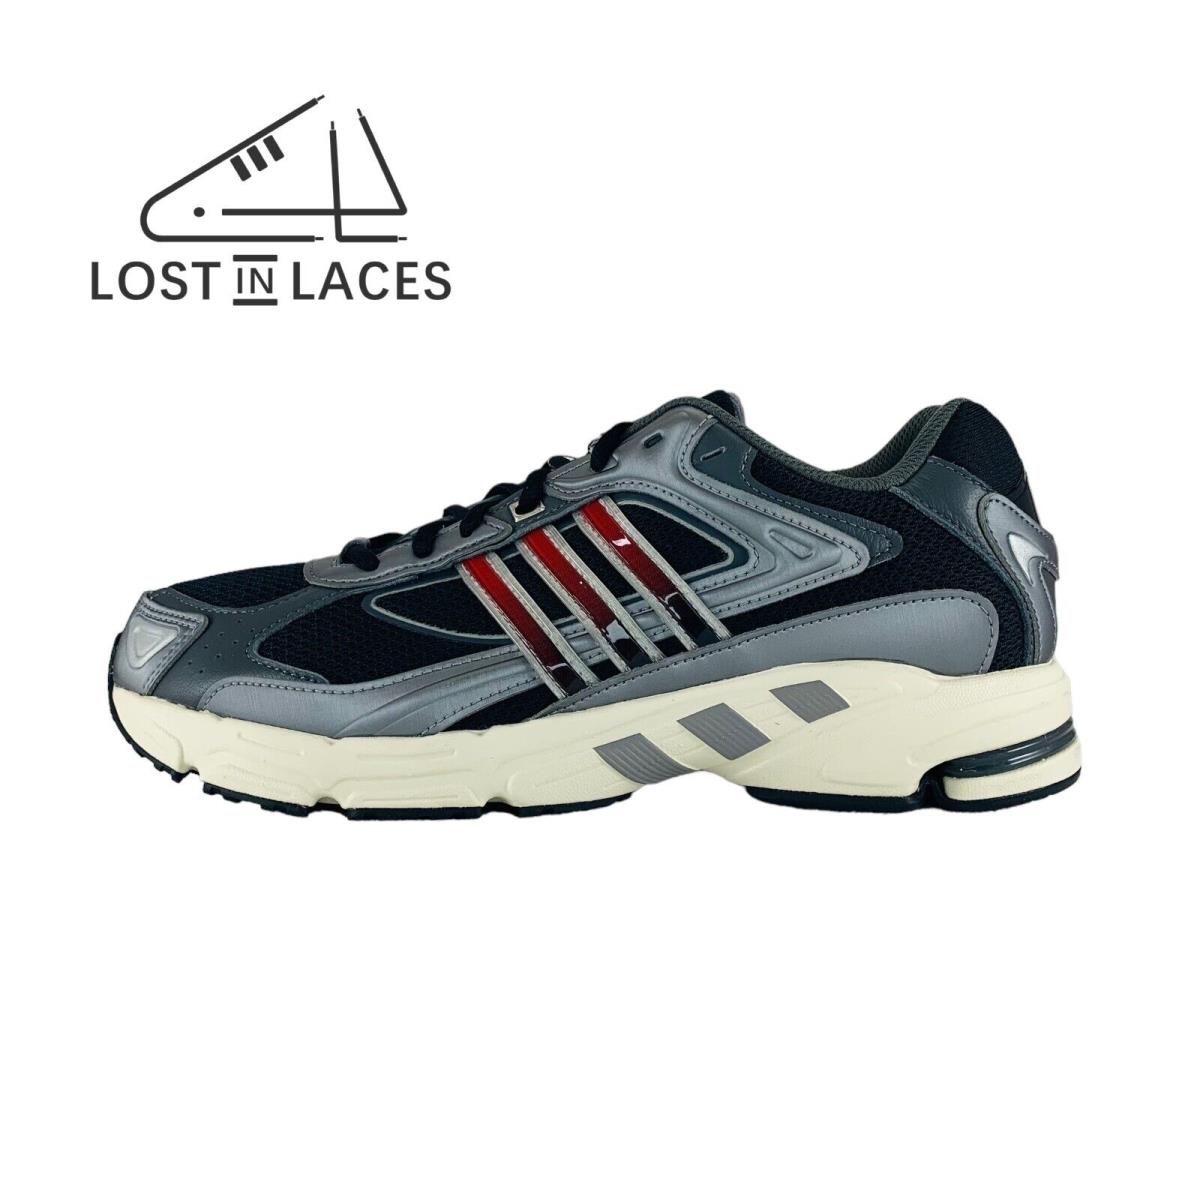 Adidas Response CL Grey Black Scarlet Sneakers Shoes IE0574 Men`s Sizes